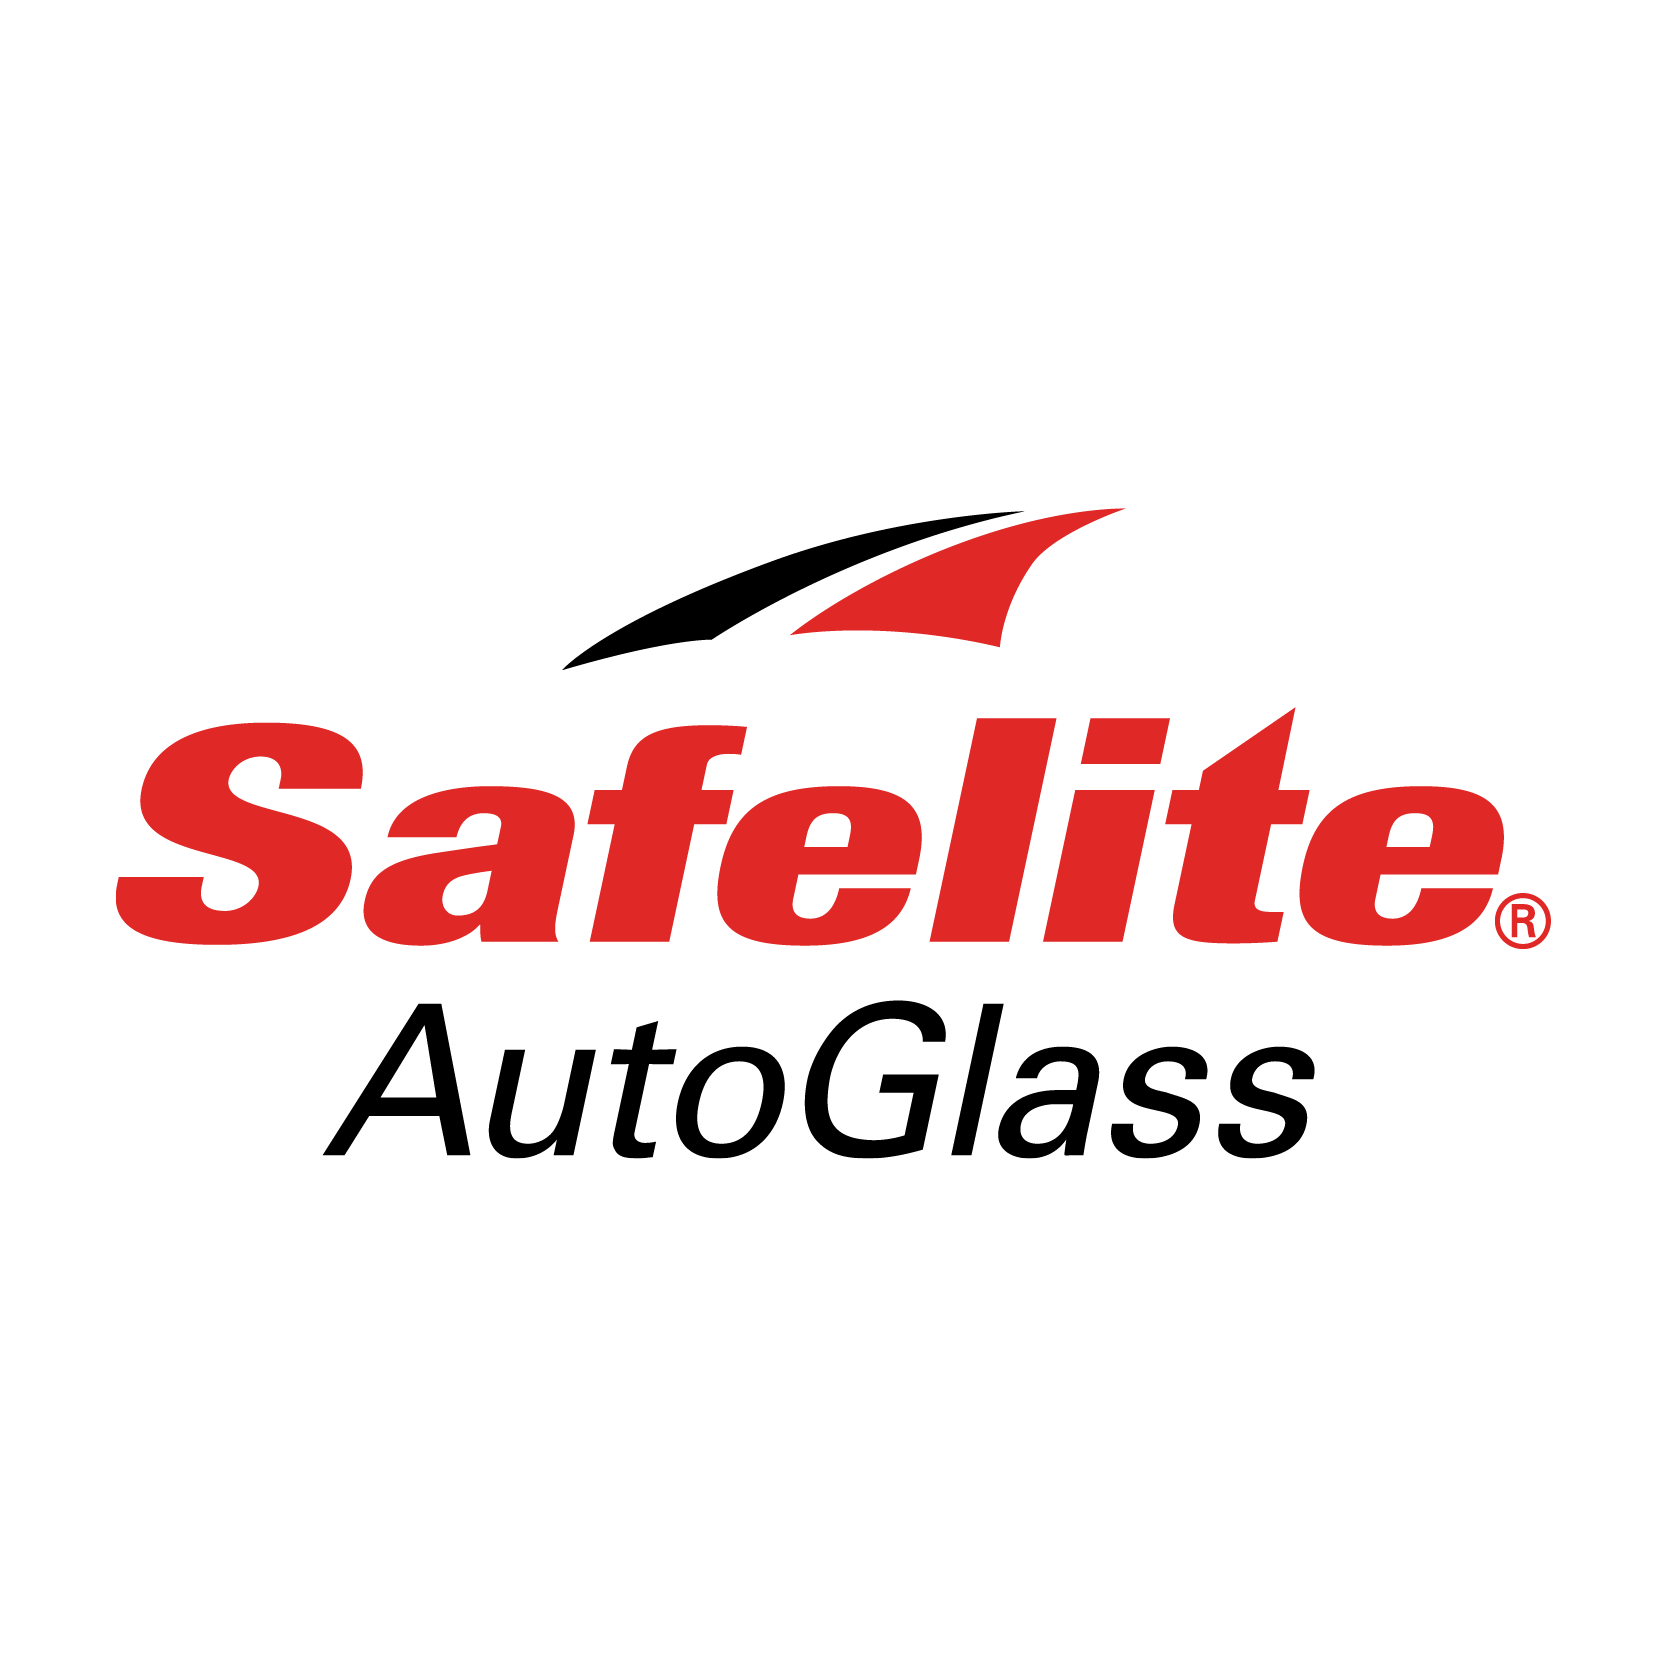 Safelite coupon codes, promo codes and deals